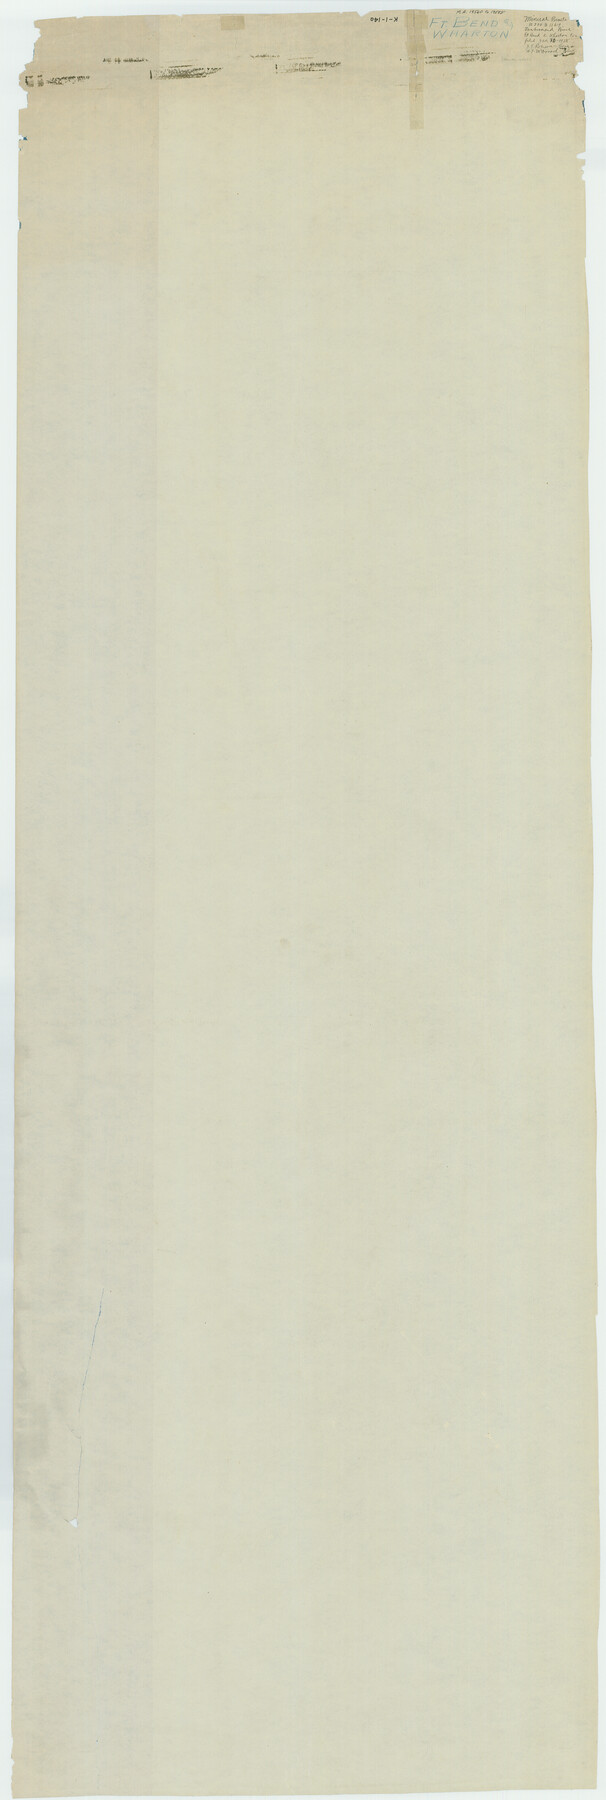 65660, [Sketch for Mineral Application 19560 - 19588 - San Bernard River], General Map Collection